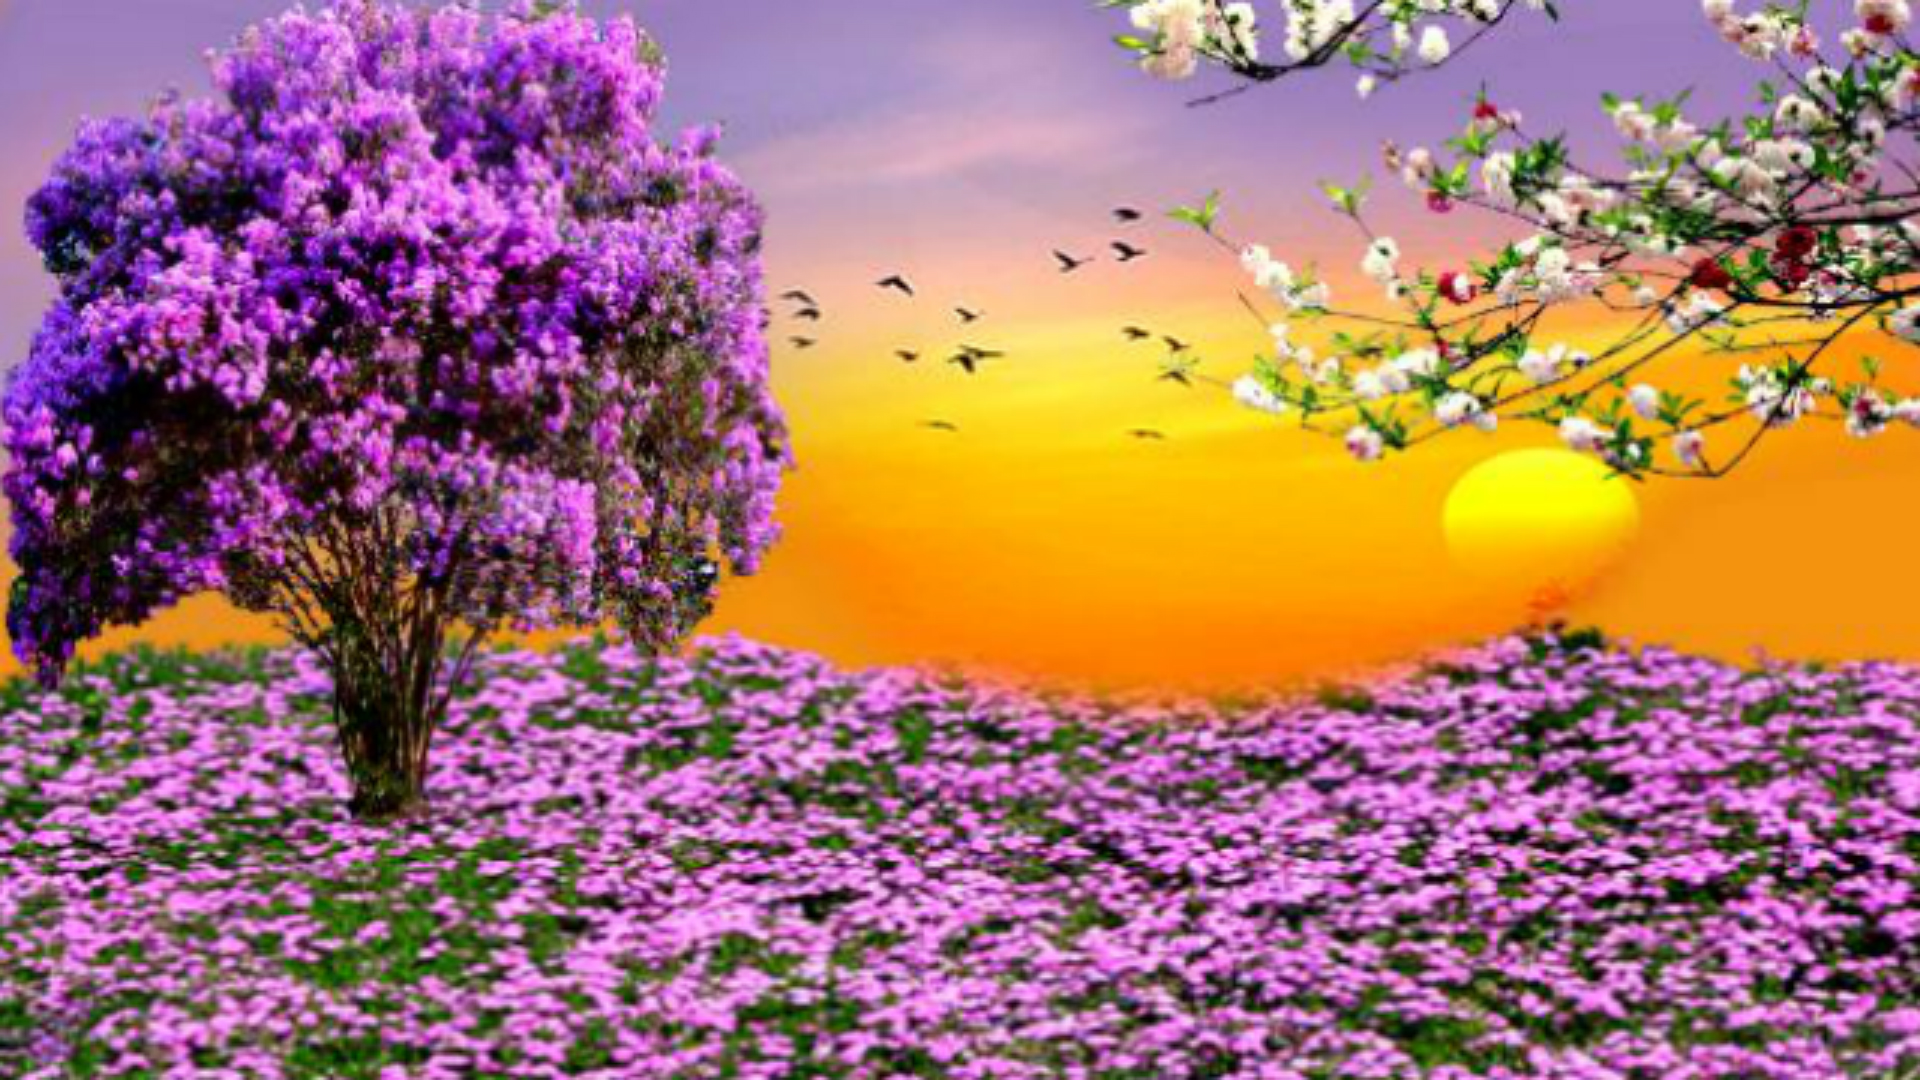 Nature Spring Purple Flowers Garden Sunset HD Wallpaper For Desktop